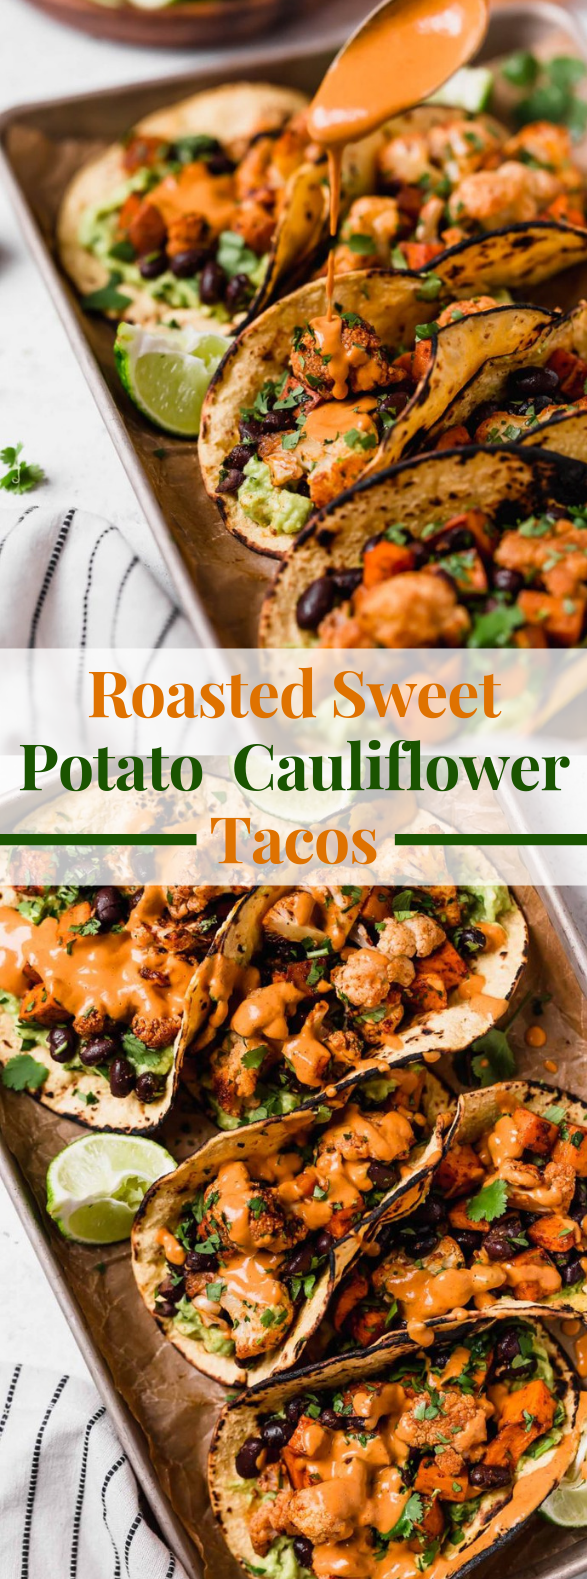 Roasted sweet potato + cauliflower tacos #vegetarian #vegan